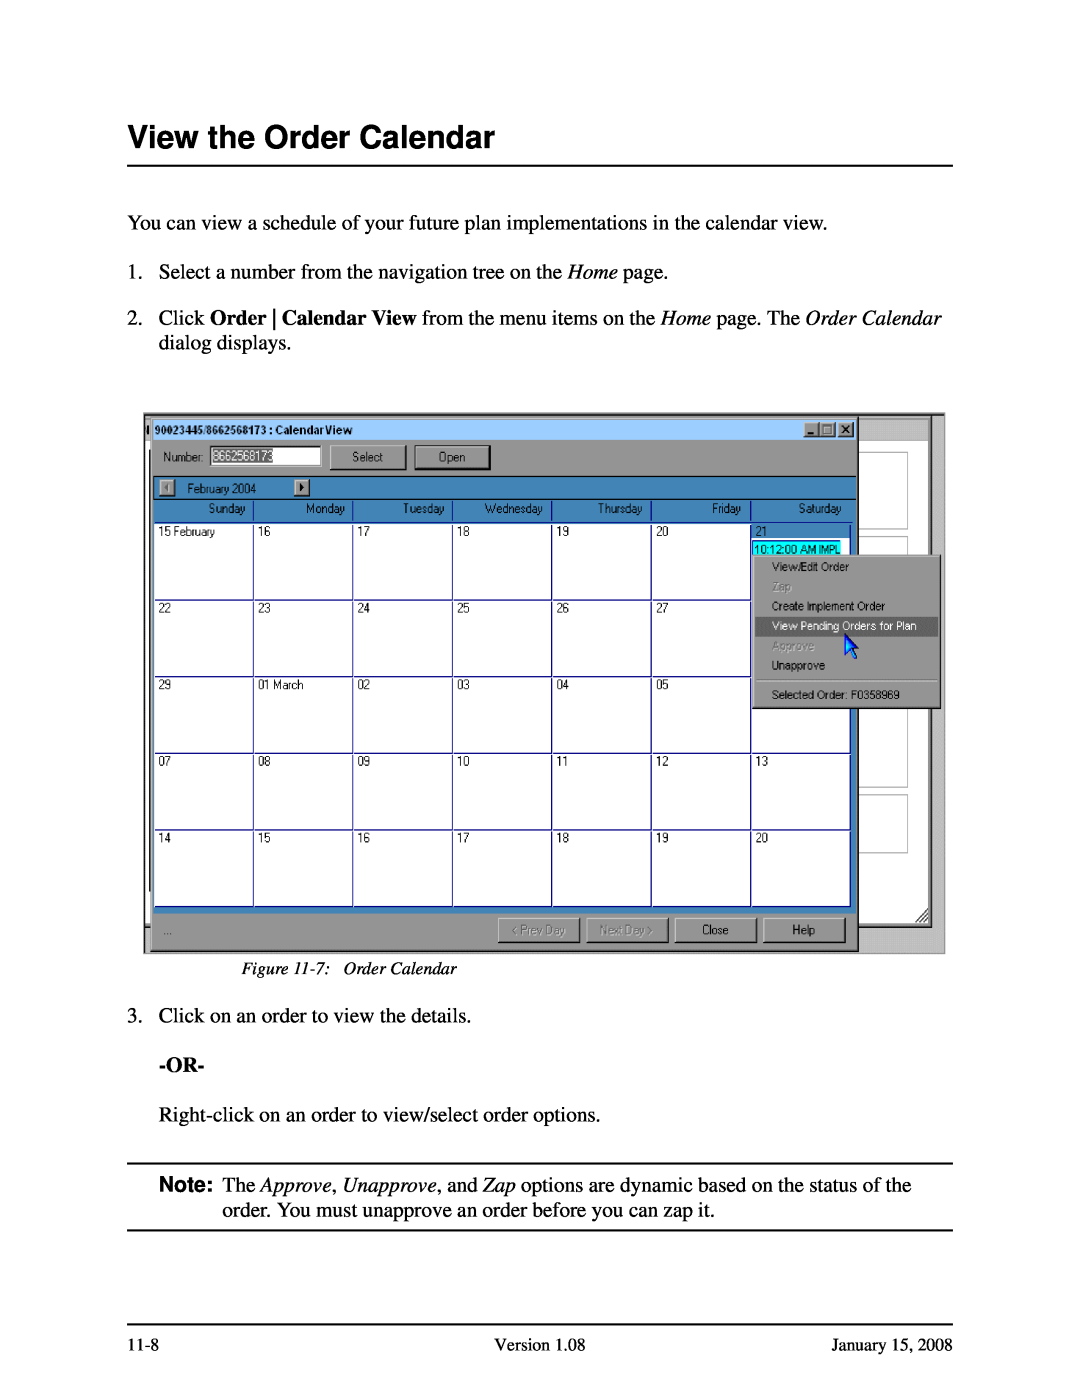 Verizon Network Manager Nodes manual View the Order Calendar 